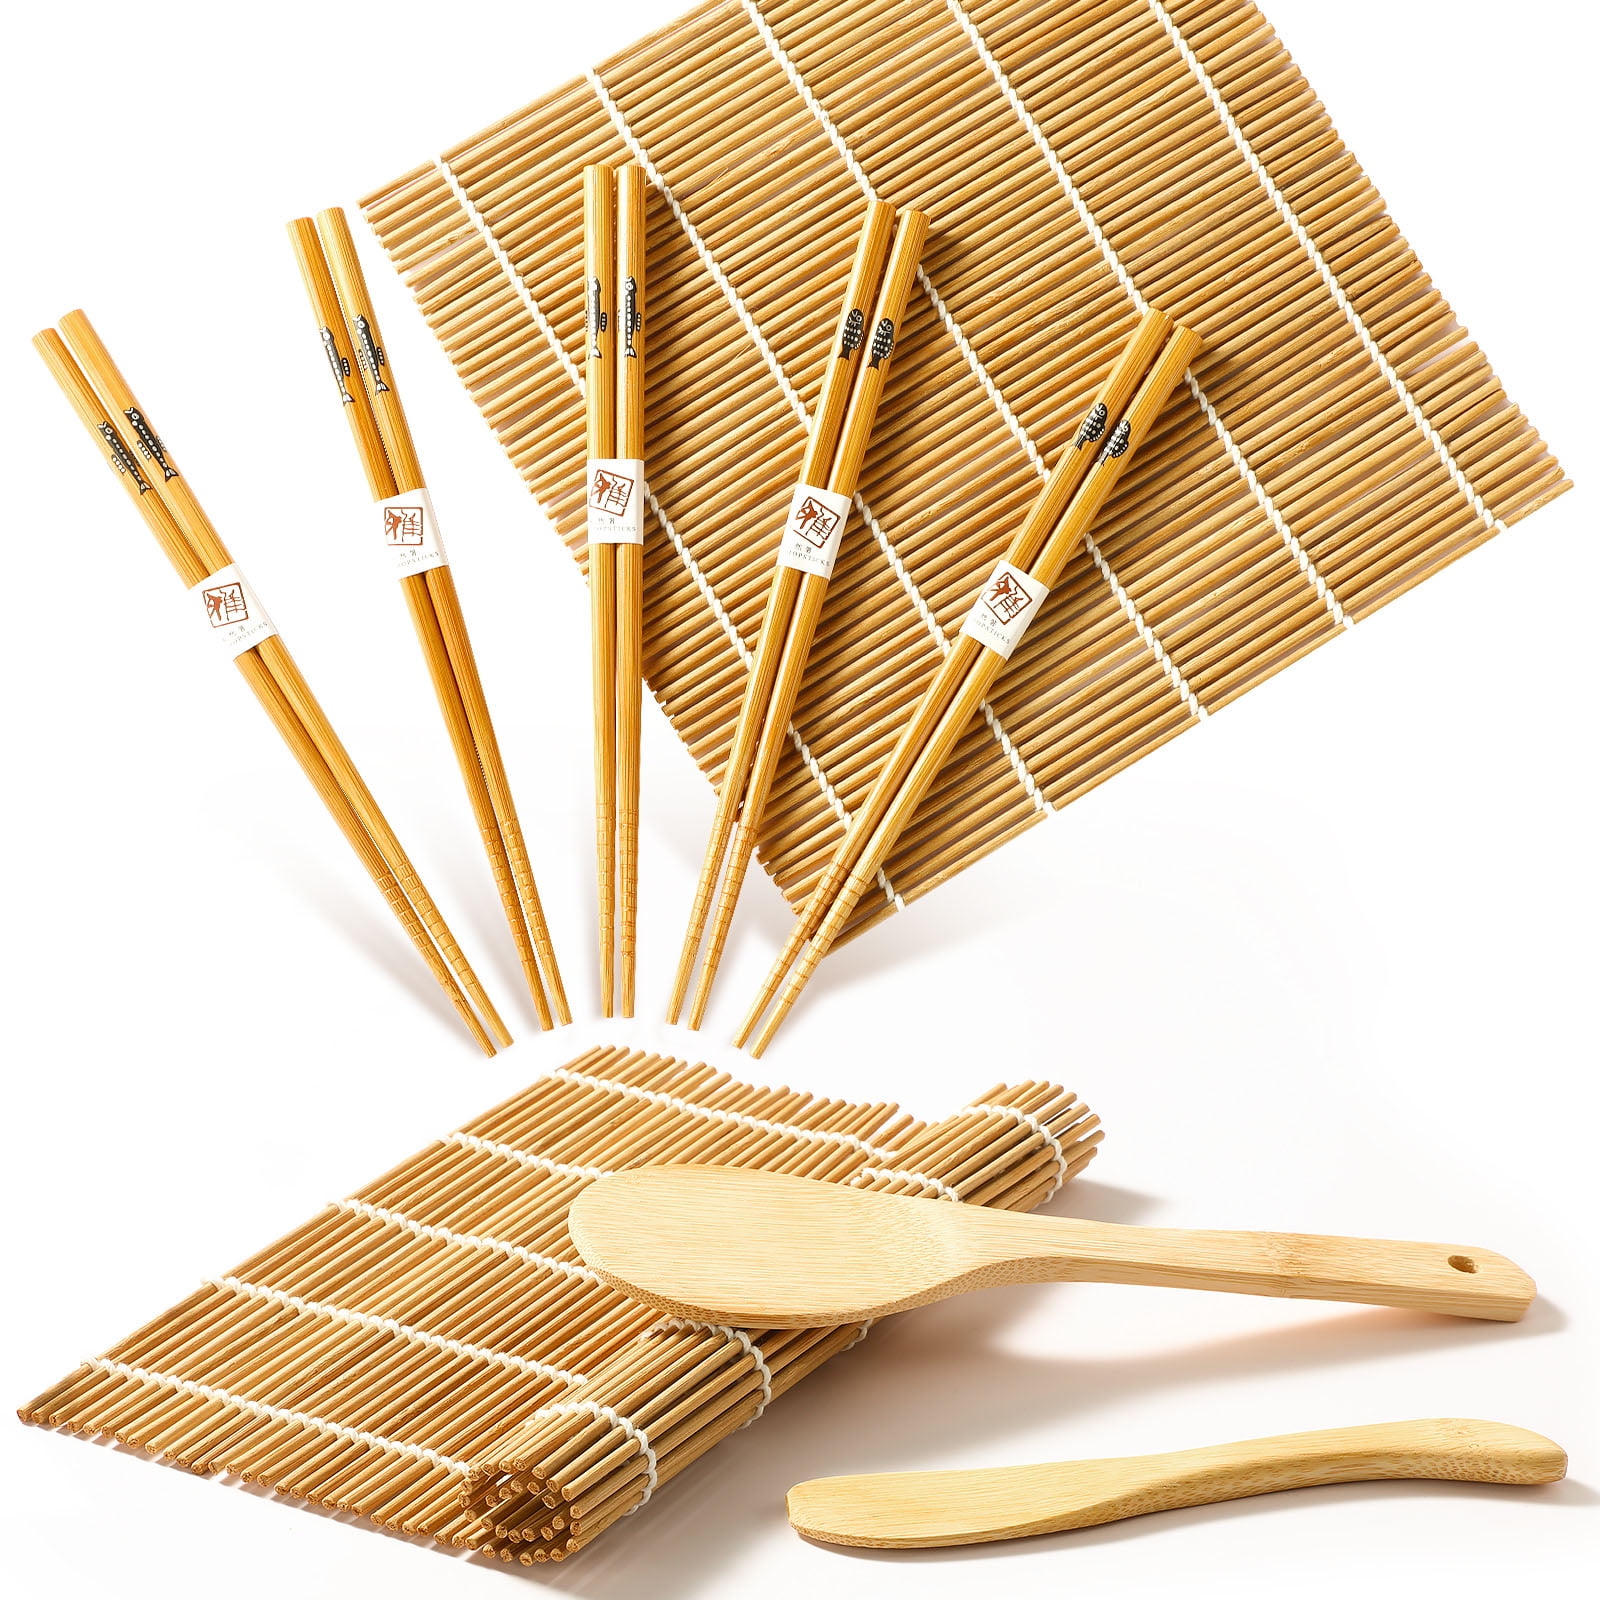 TIMDAM Sushi Making Kit for Beginners, All in One Sushi Maker Set with  Sushi Mats Bamboo Roller, Sushi Bazooka, Chopsticks, Paddle, Spreader,  Sushi